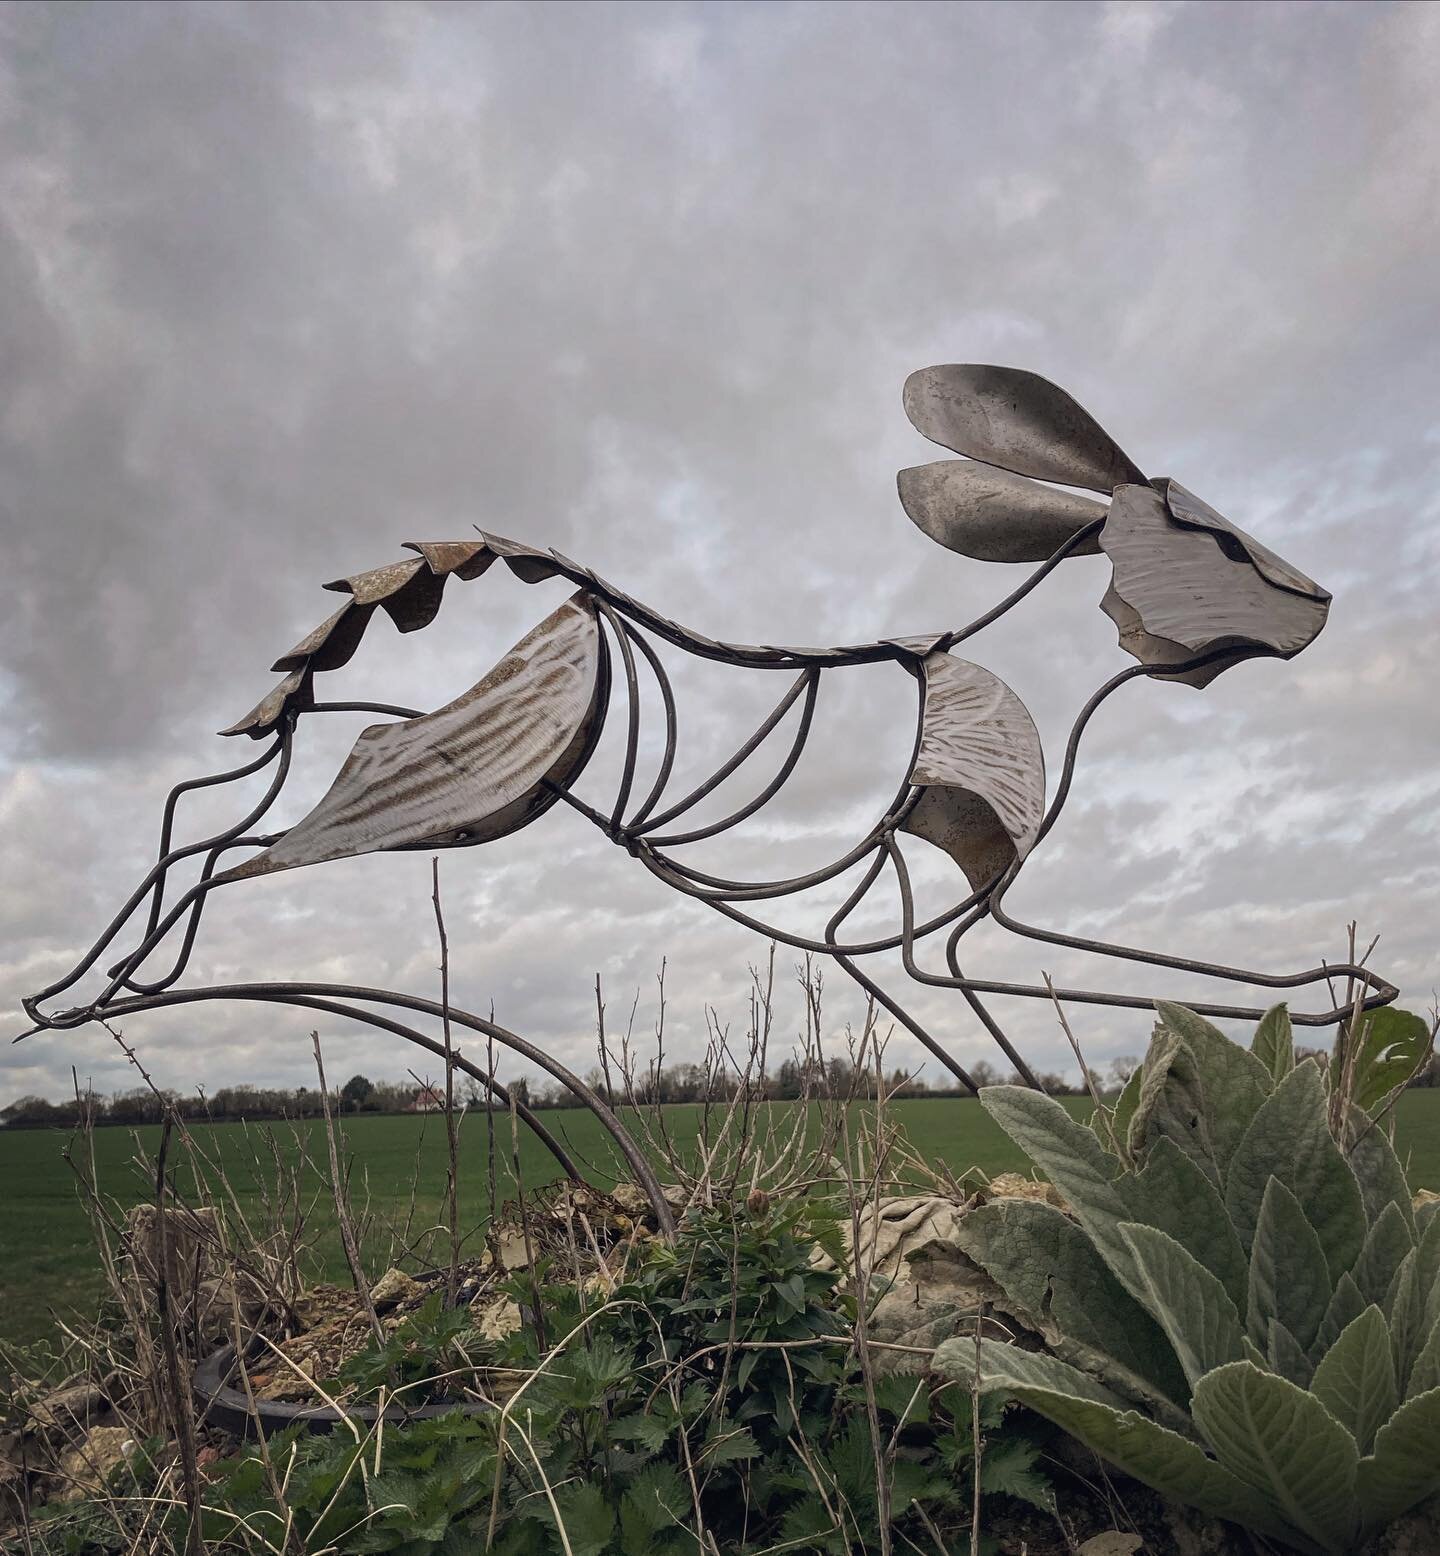 Hare sculpture ready for the galvanizers #hare #sculpture #countryside #weldedsculpture #artistblacksmith #metalwork #rtechwelder